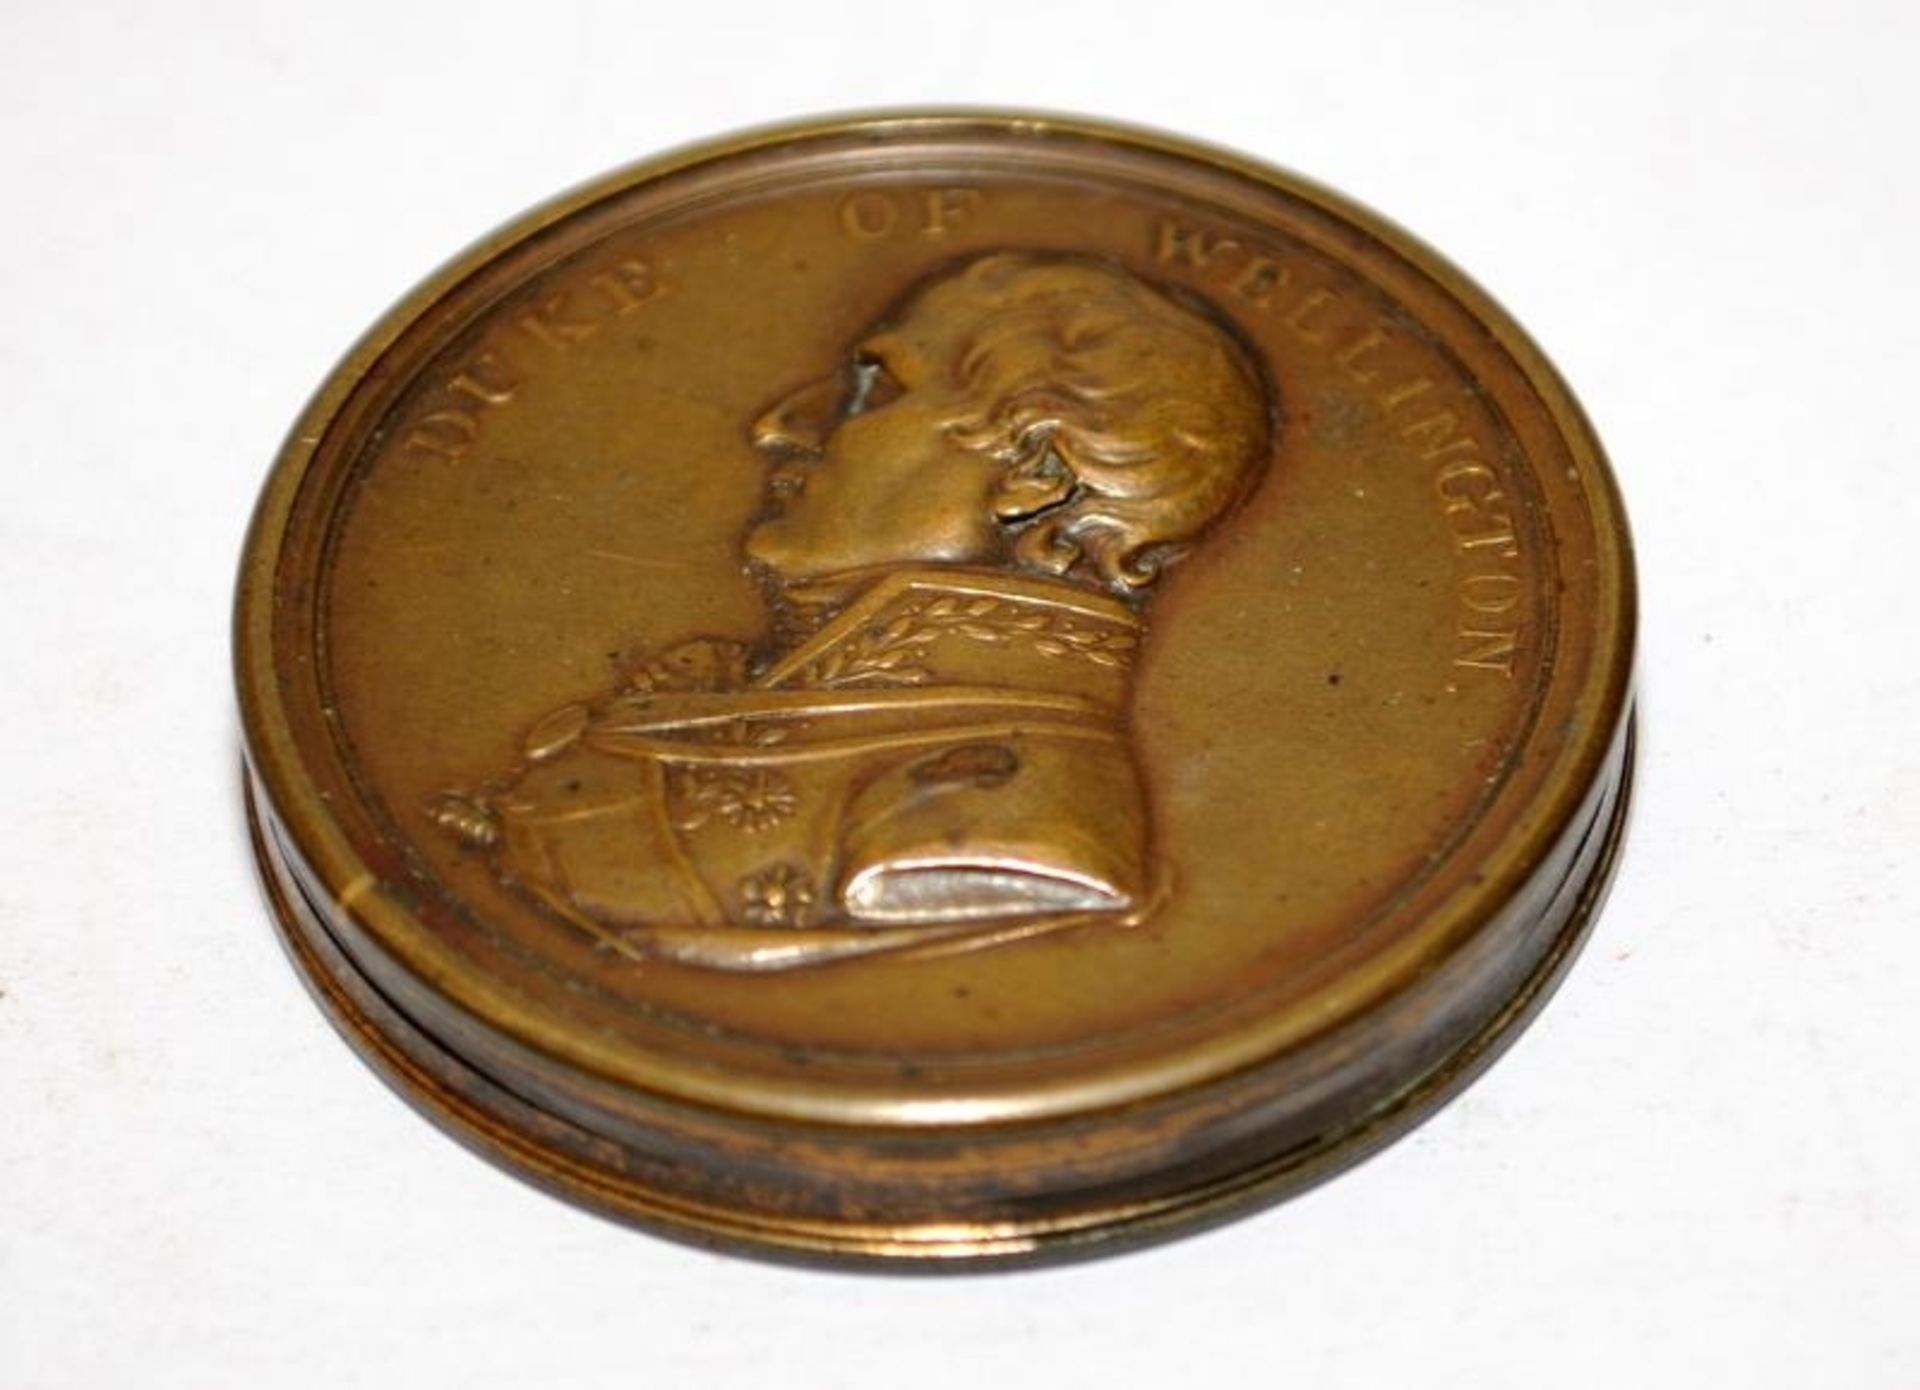 Rare early 19th Century Duke of Wellington Peninsular Campaign commemorative copper box. This